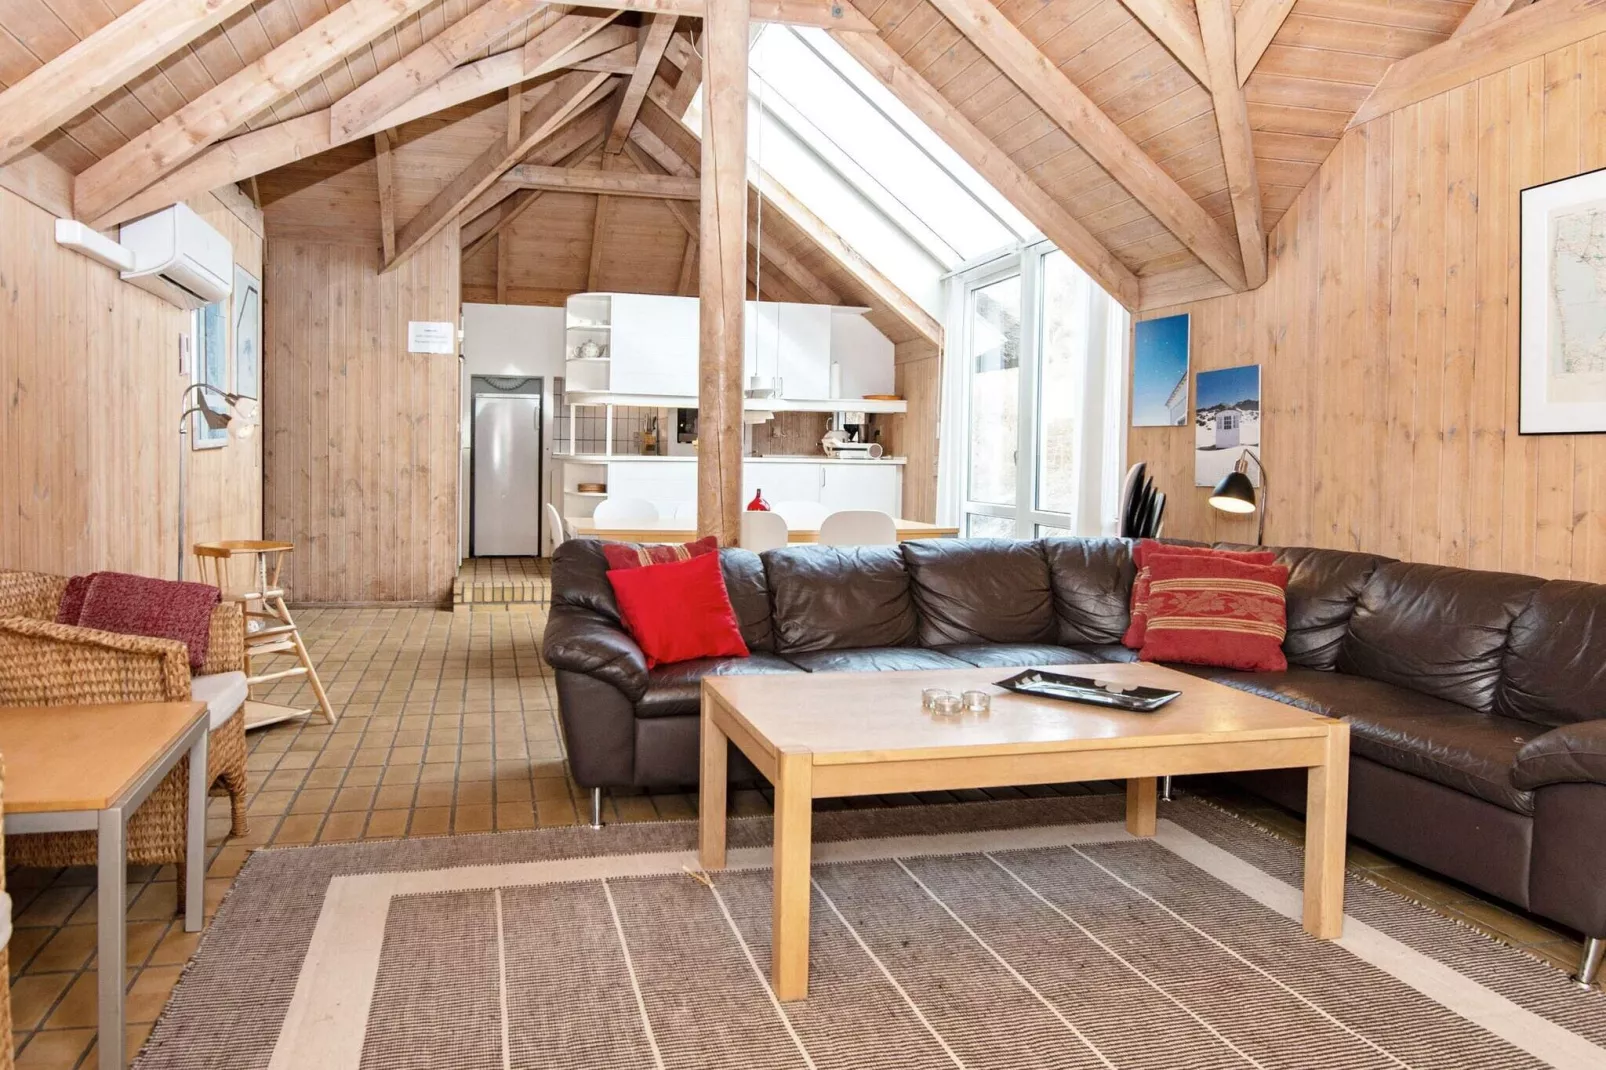 Ruim 12-persoons vakantiehuis in Hvide Sande met sauna